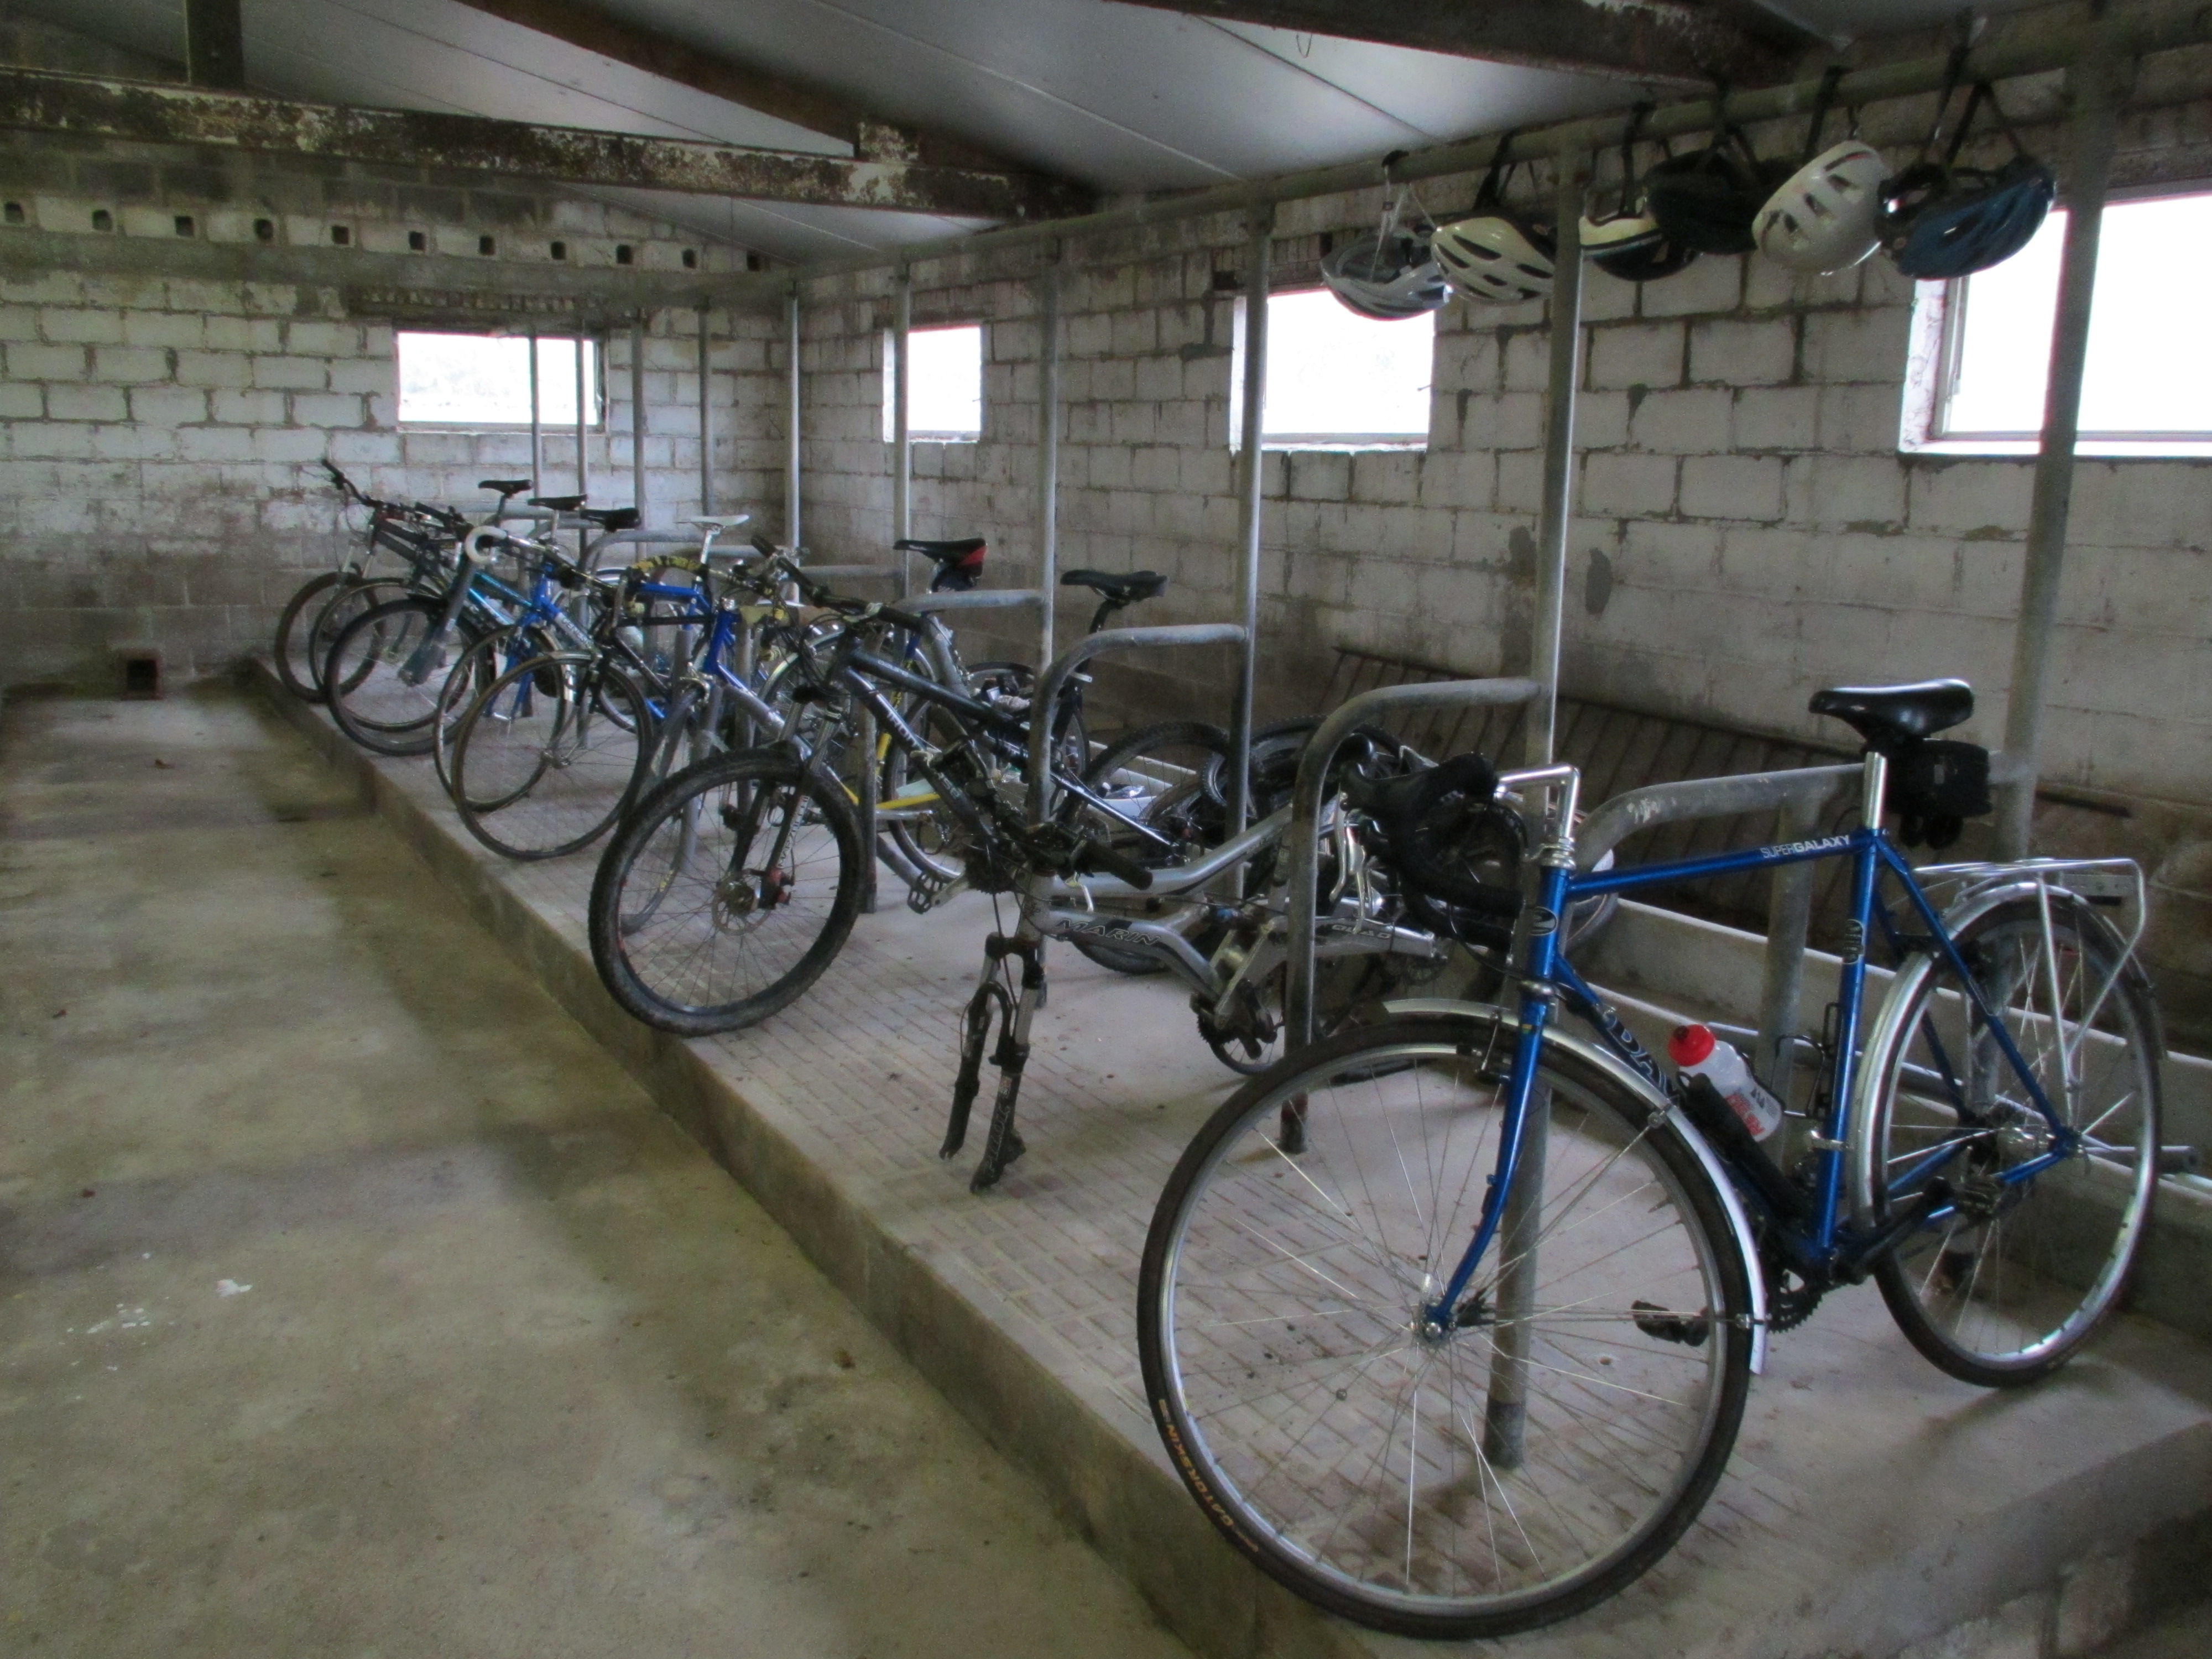 Bike Shed Plans PDF 12’12 shed plans | francoiselgheintzmant9812